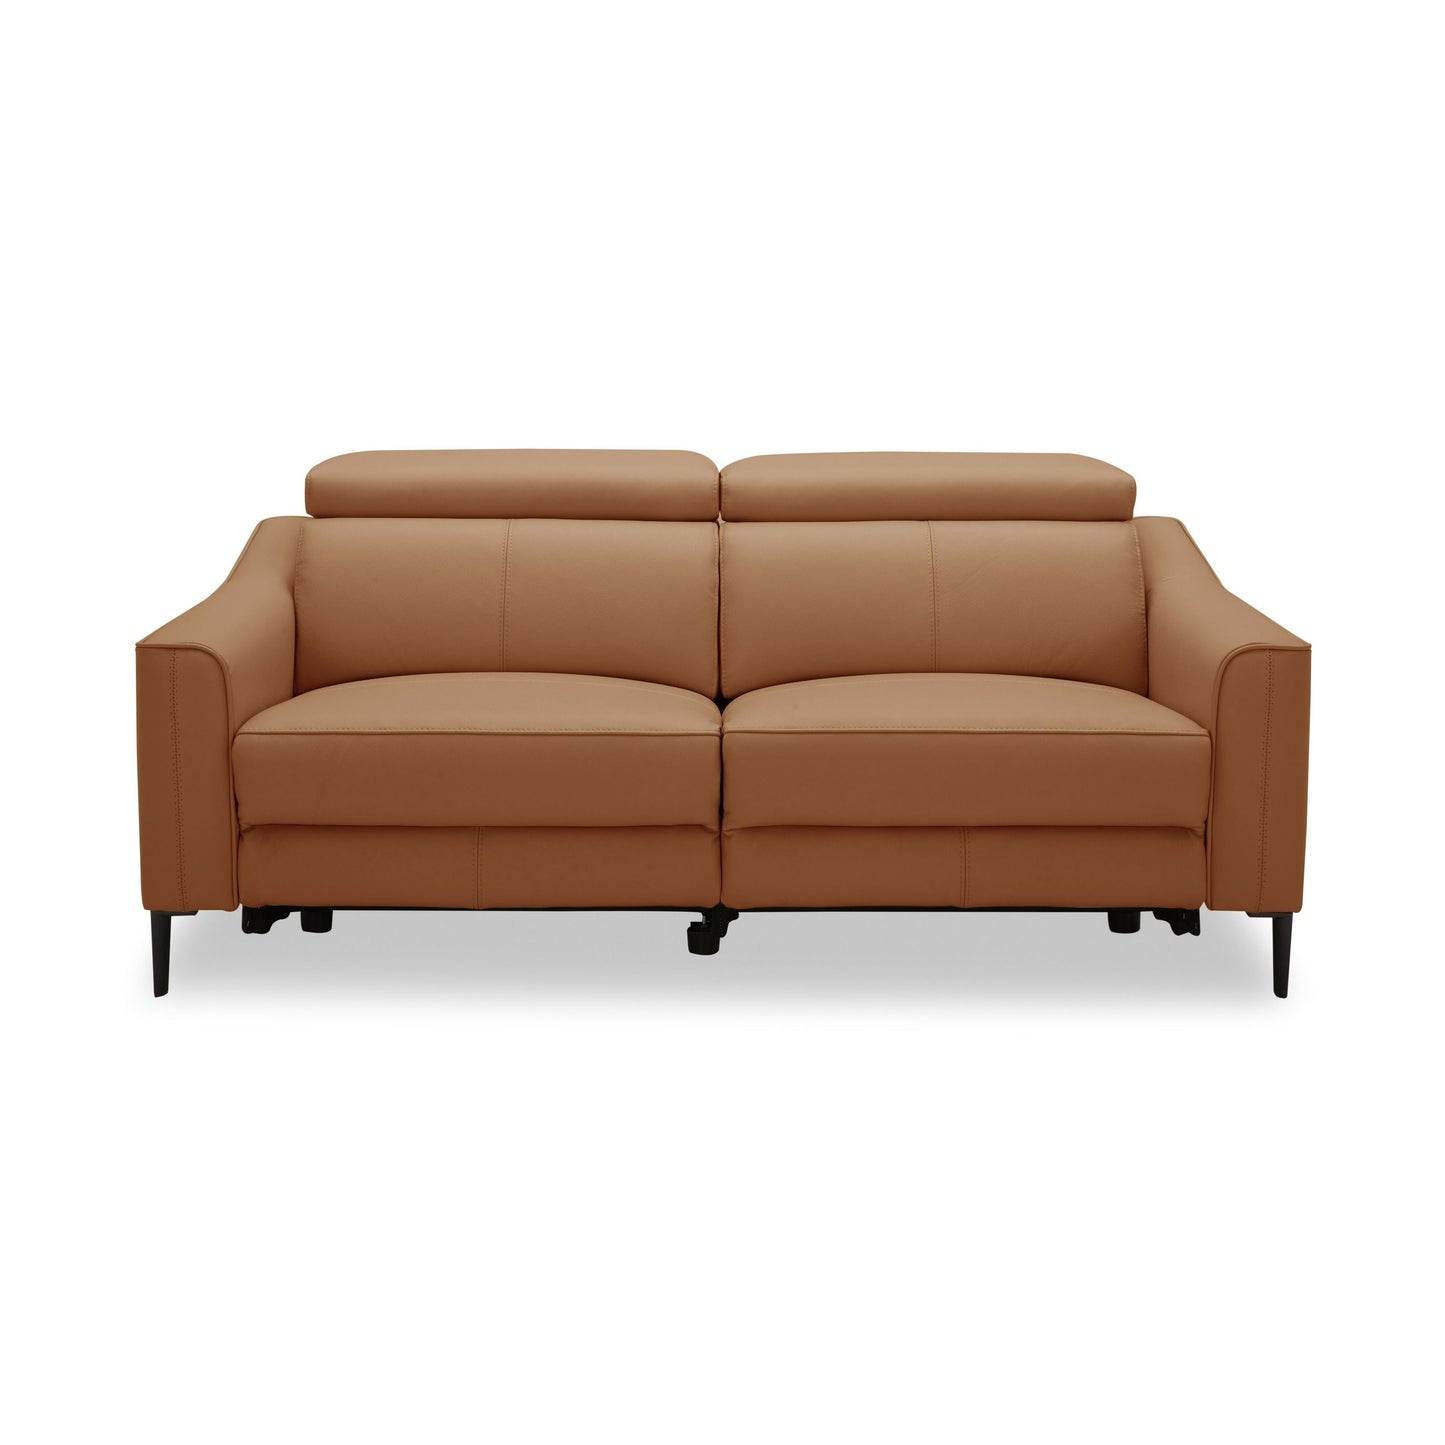 Divani Casa Eden - Modern Camel Leather Sofa With 2 Recliners